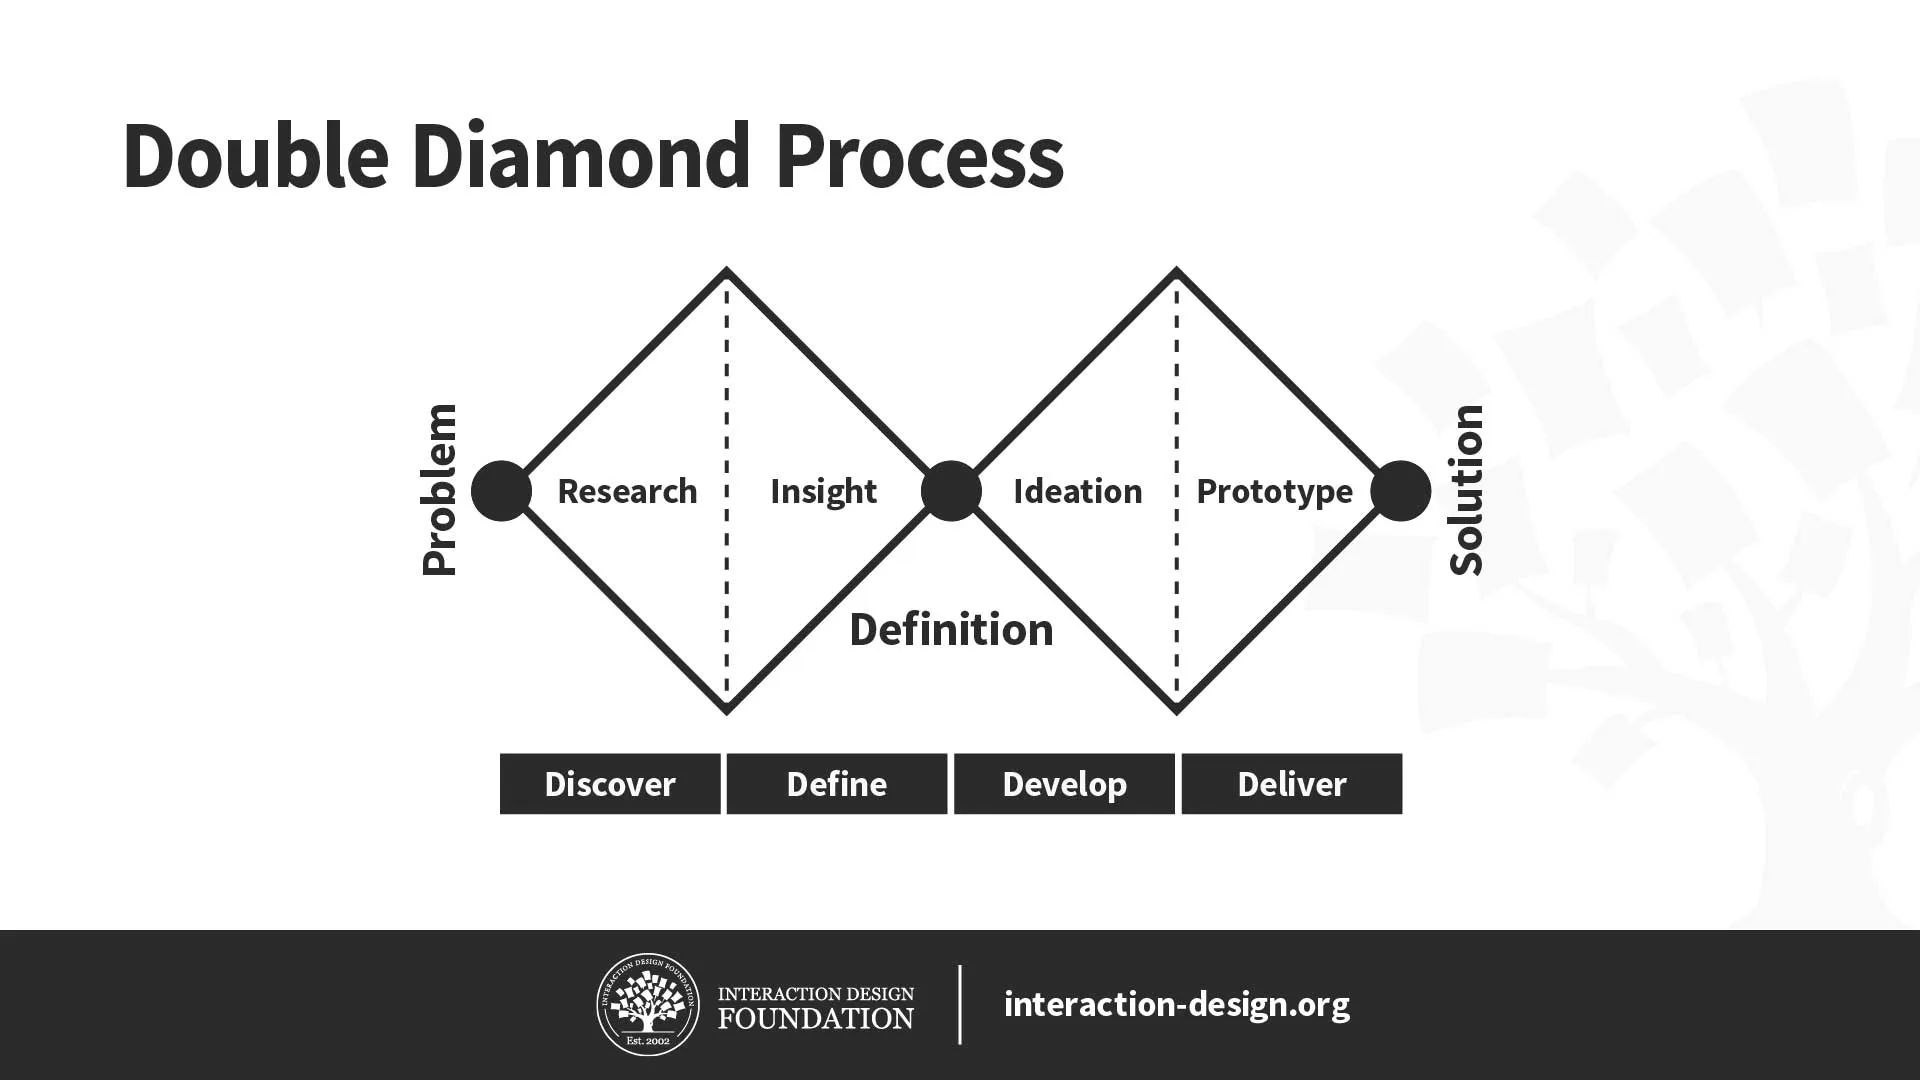 A diagram showing the Double Diamond design process.